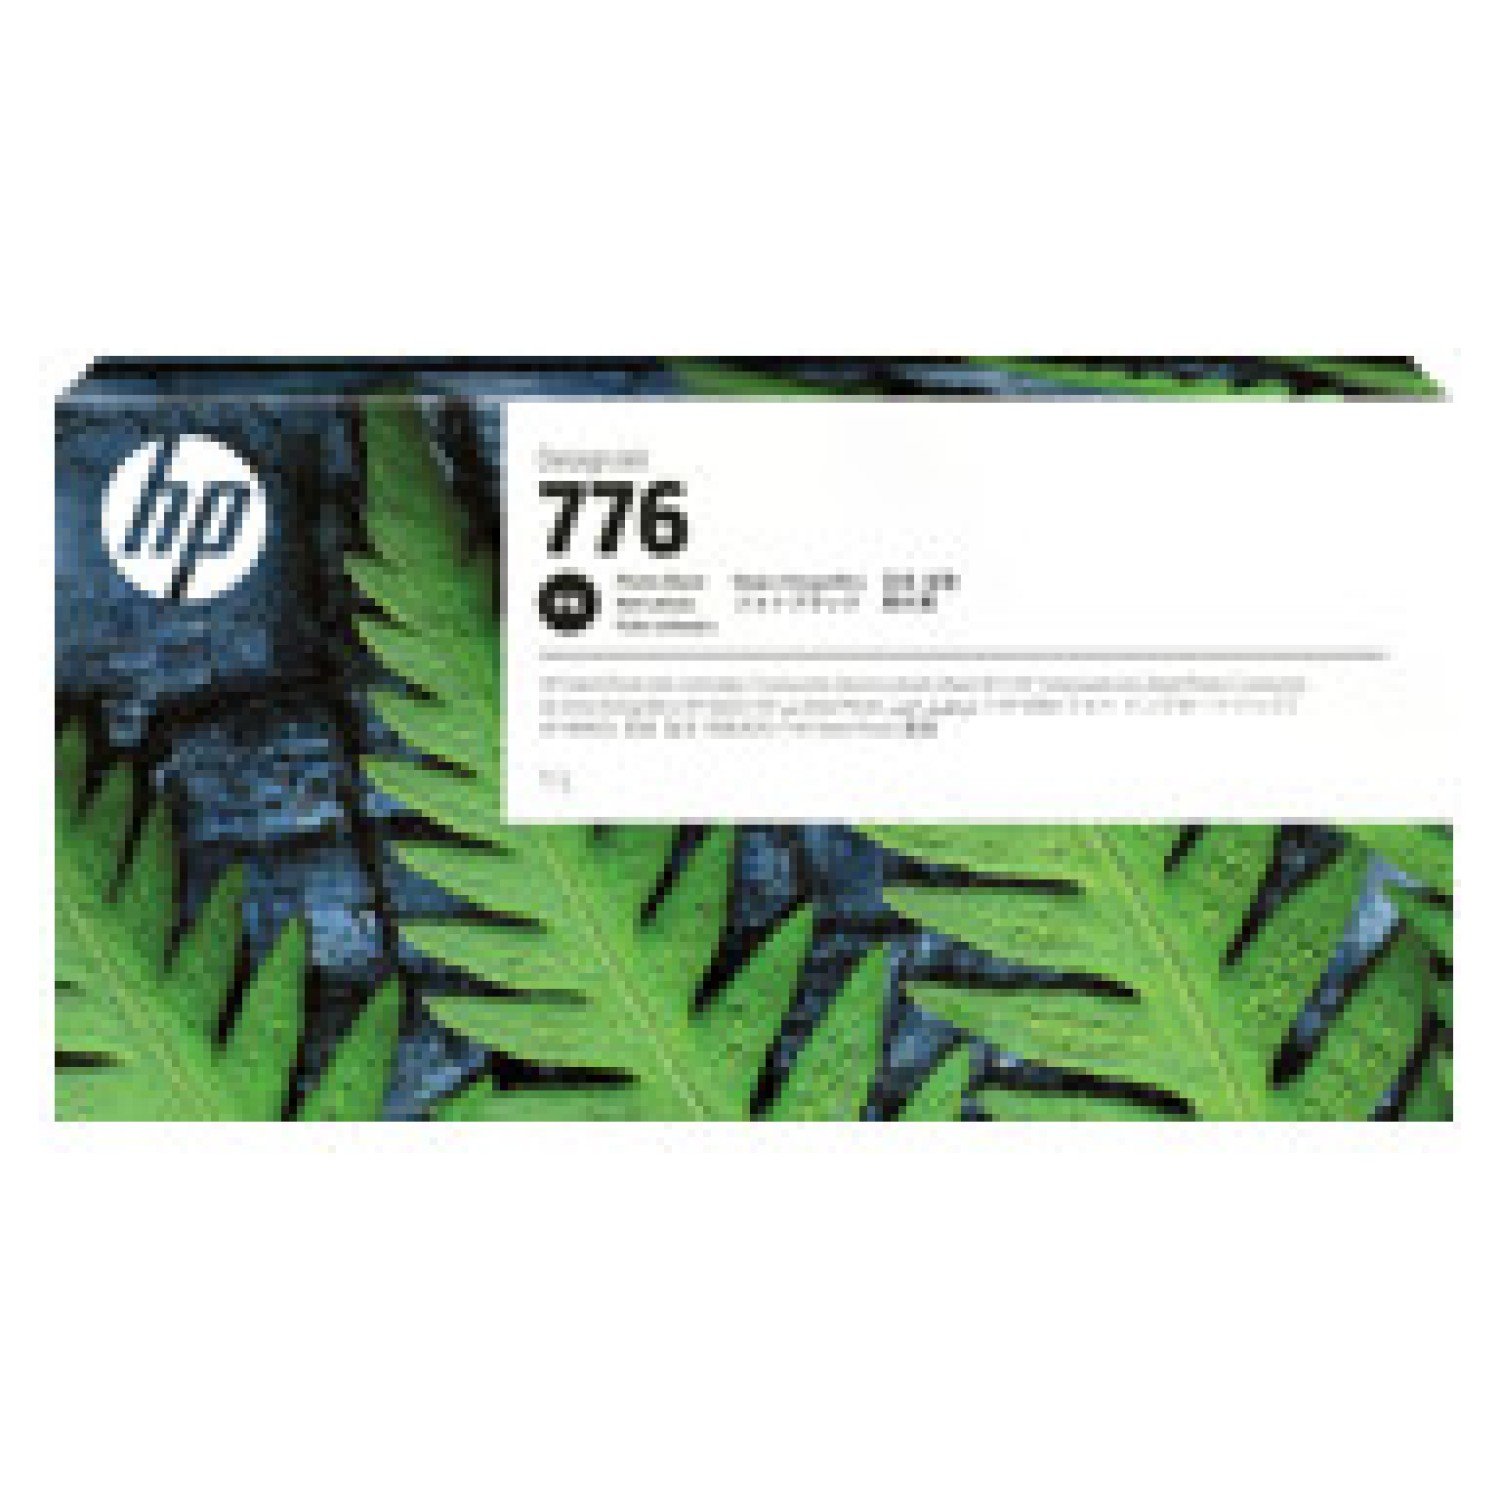 HP 776 1L Photo Black Ink Cartridge